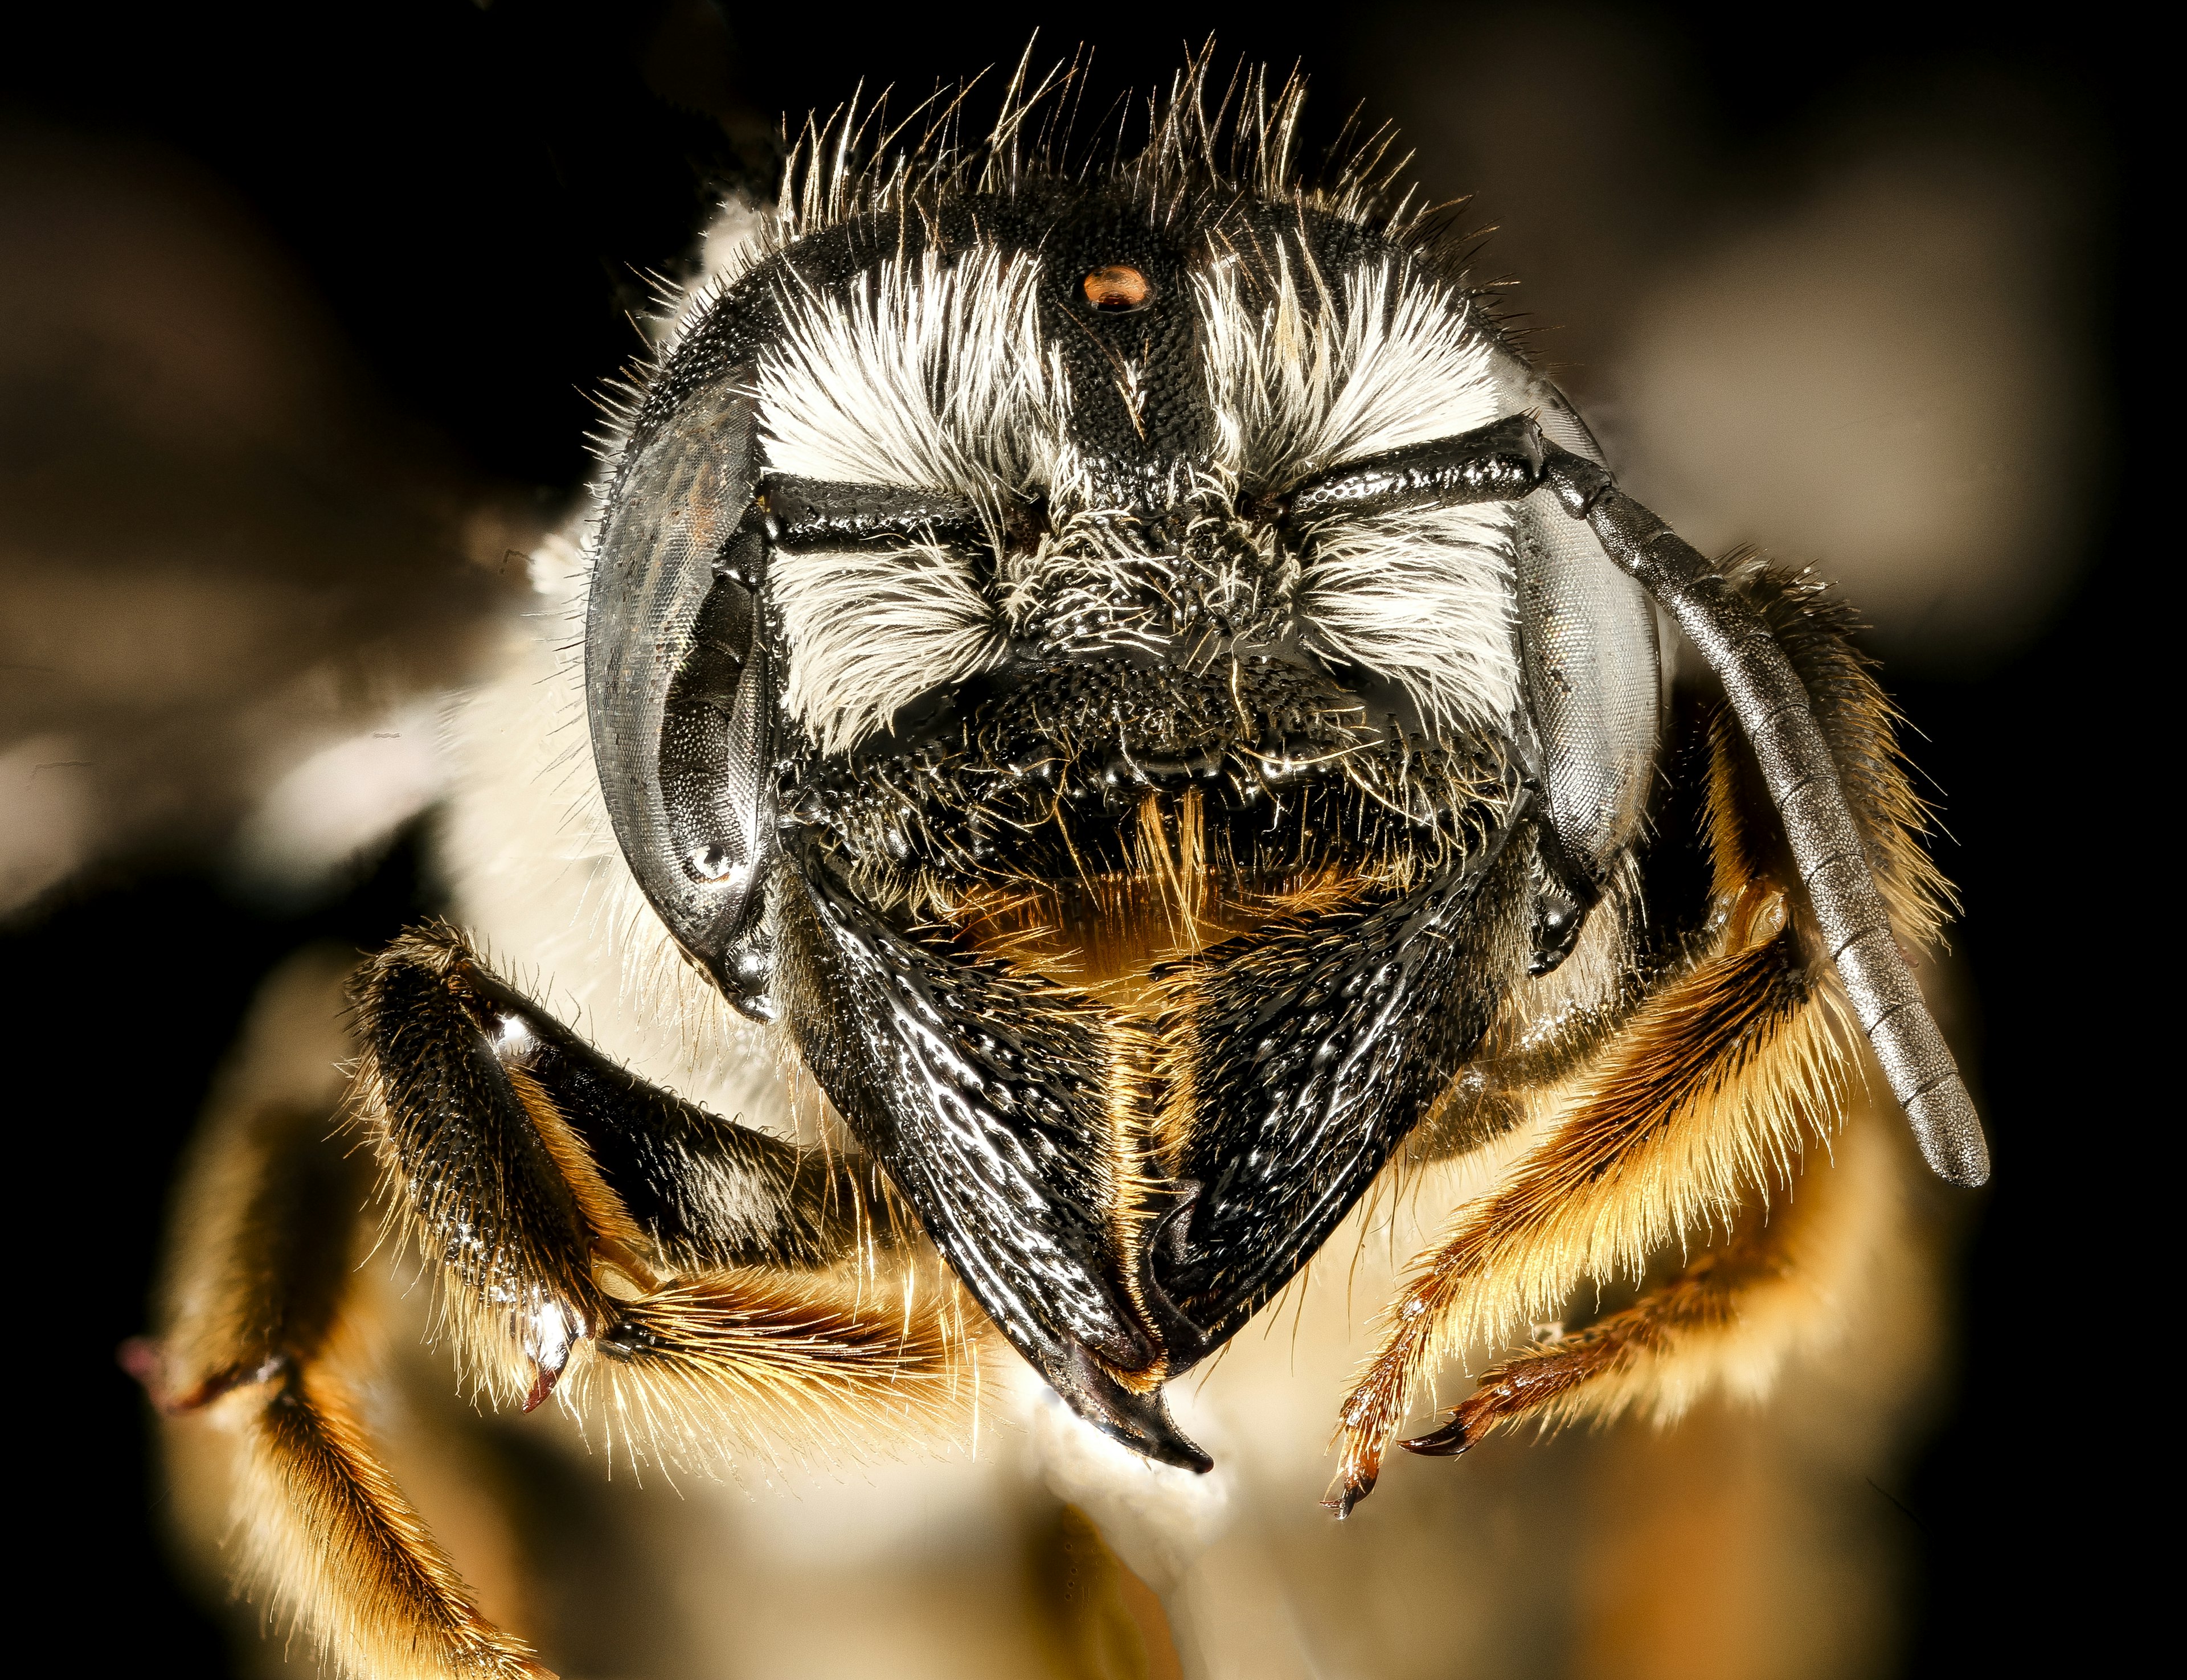 The magnificent mandibled Megachile pugnata